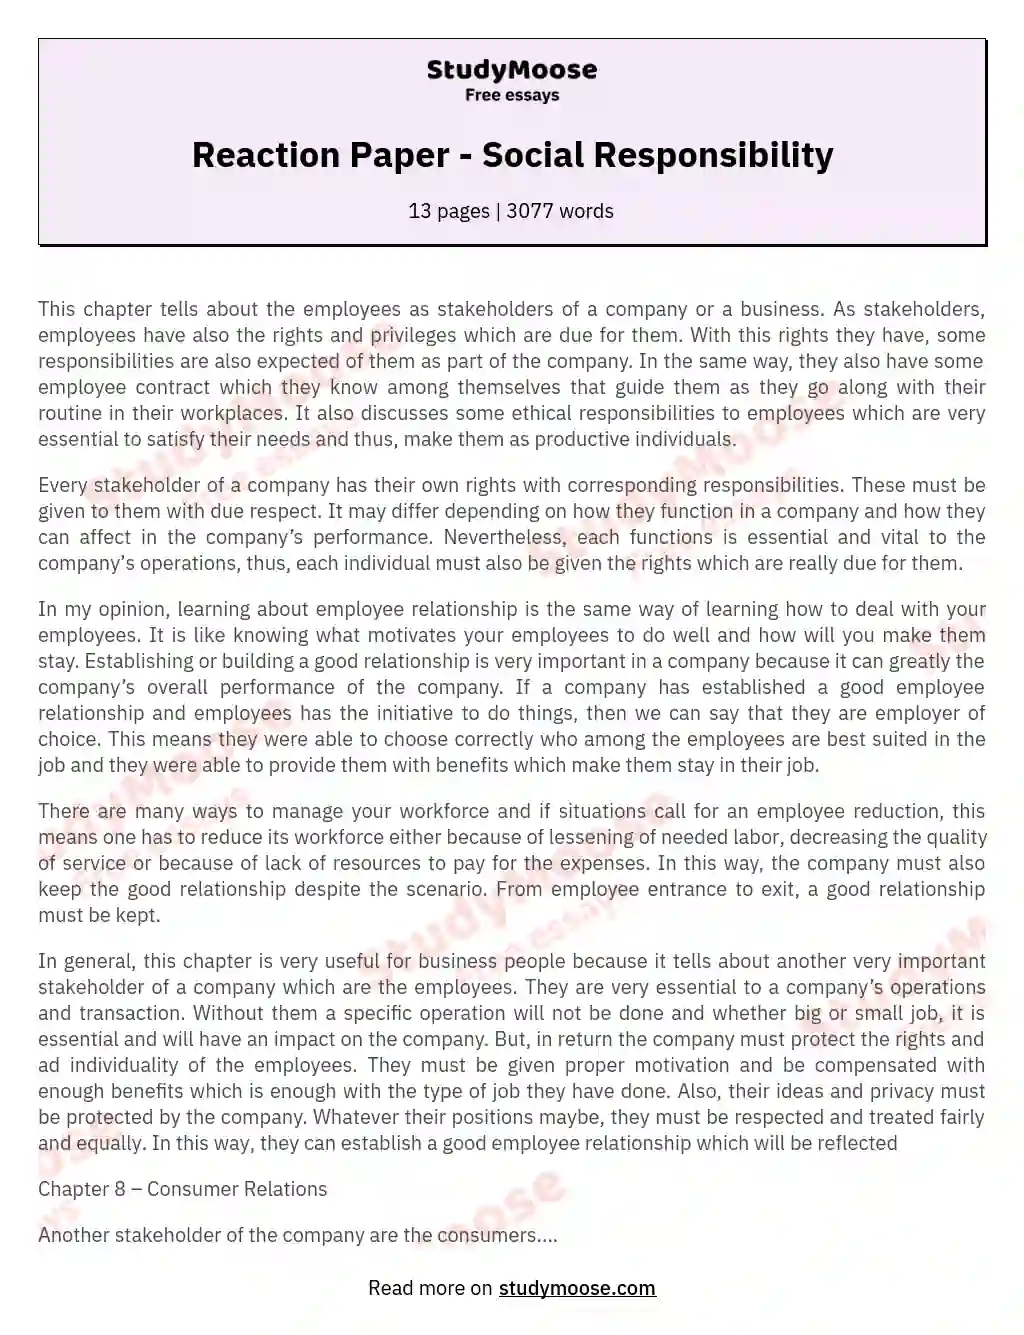 Reaction Paper - Social Responsibility essay